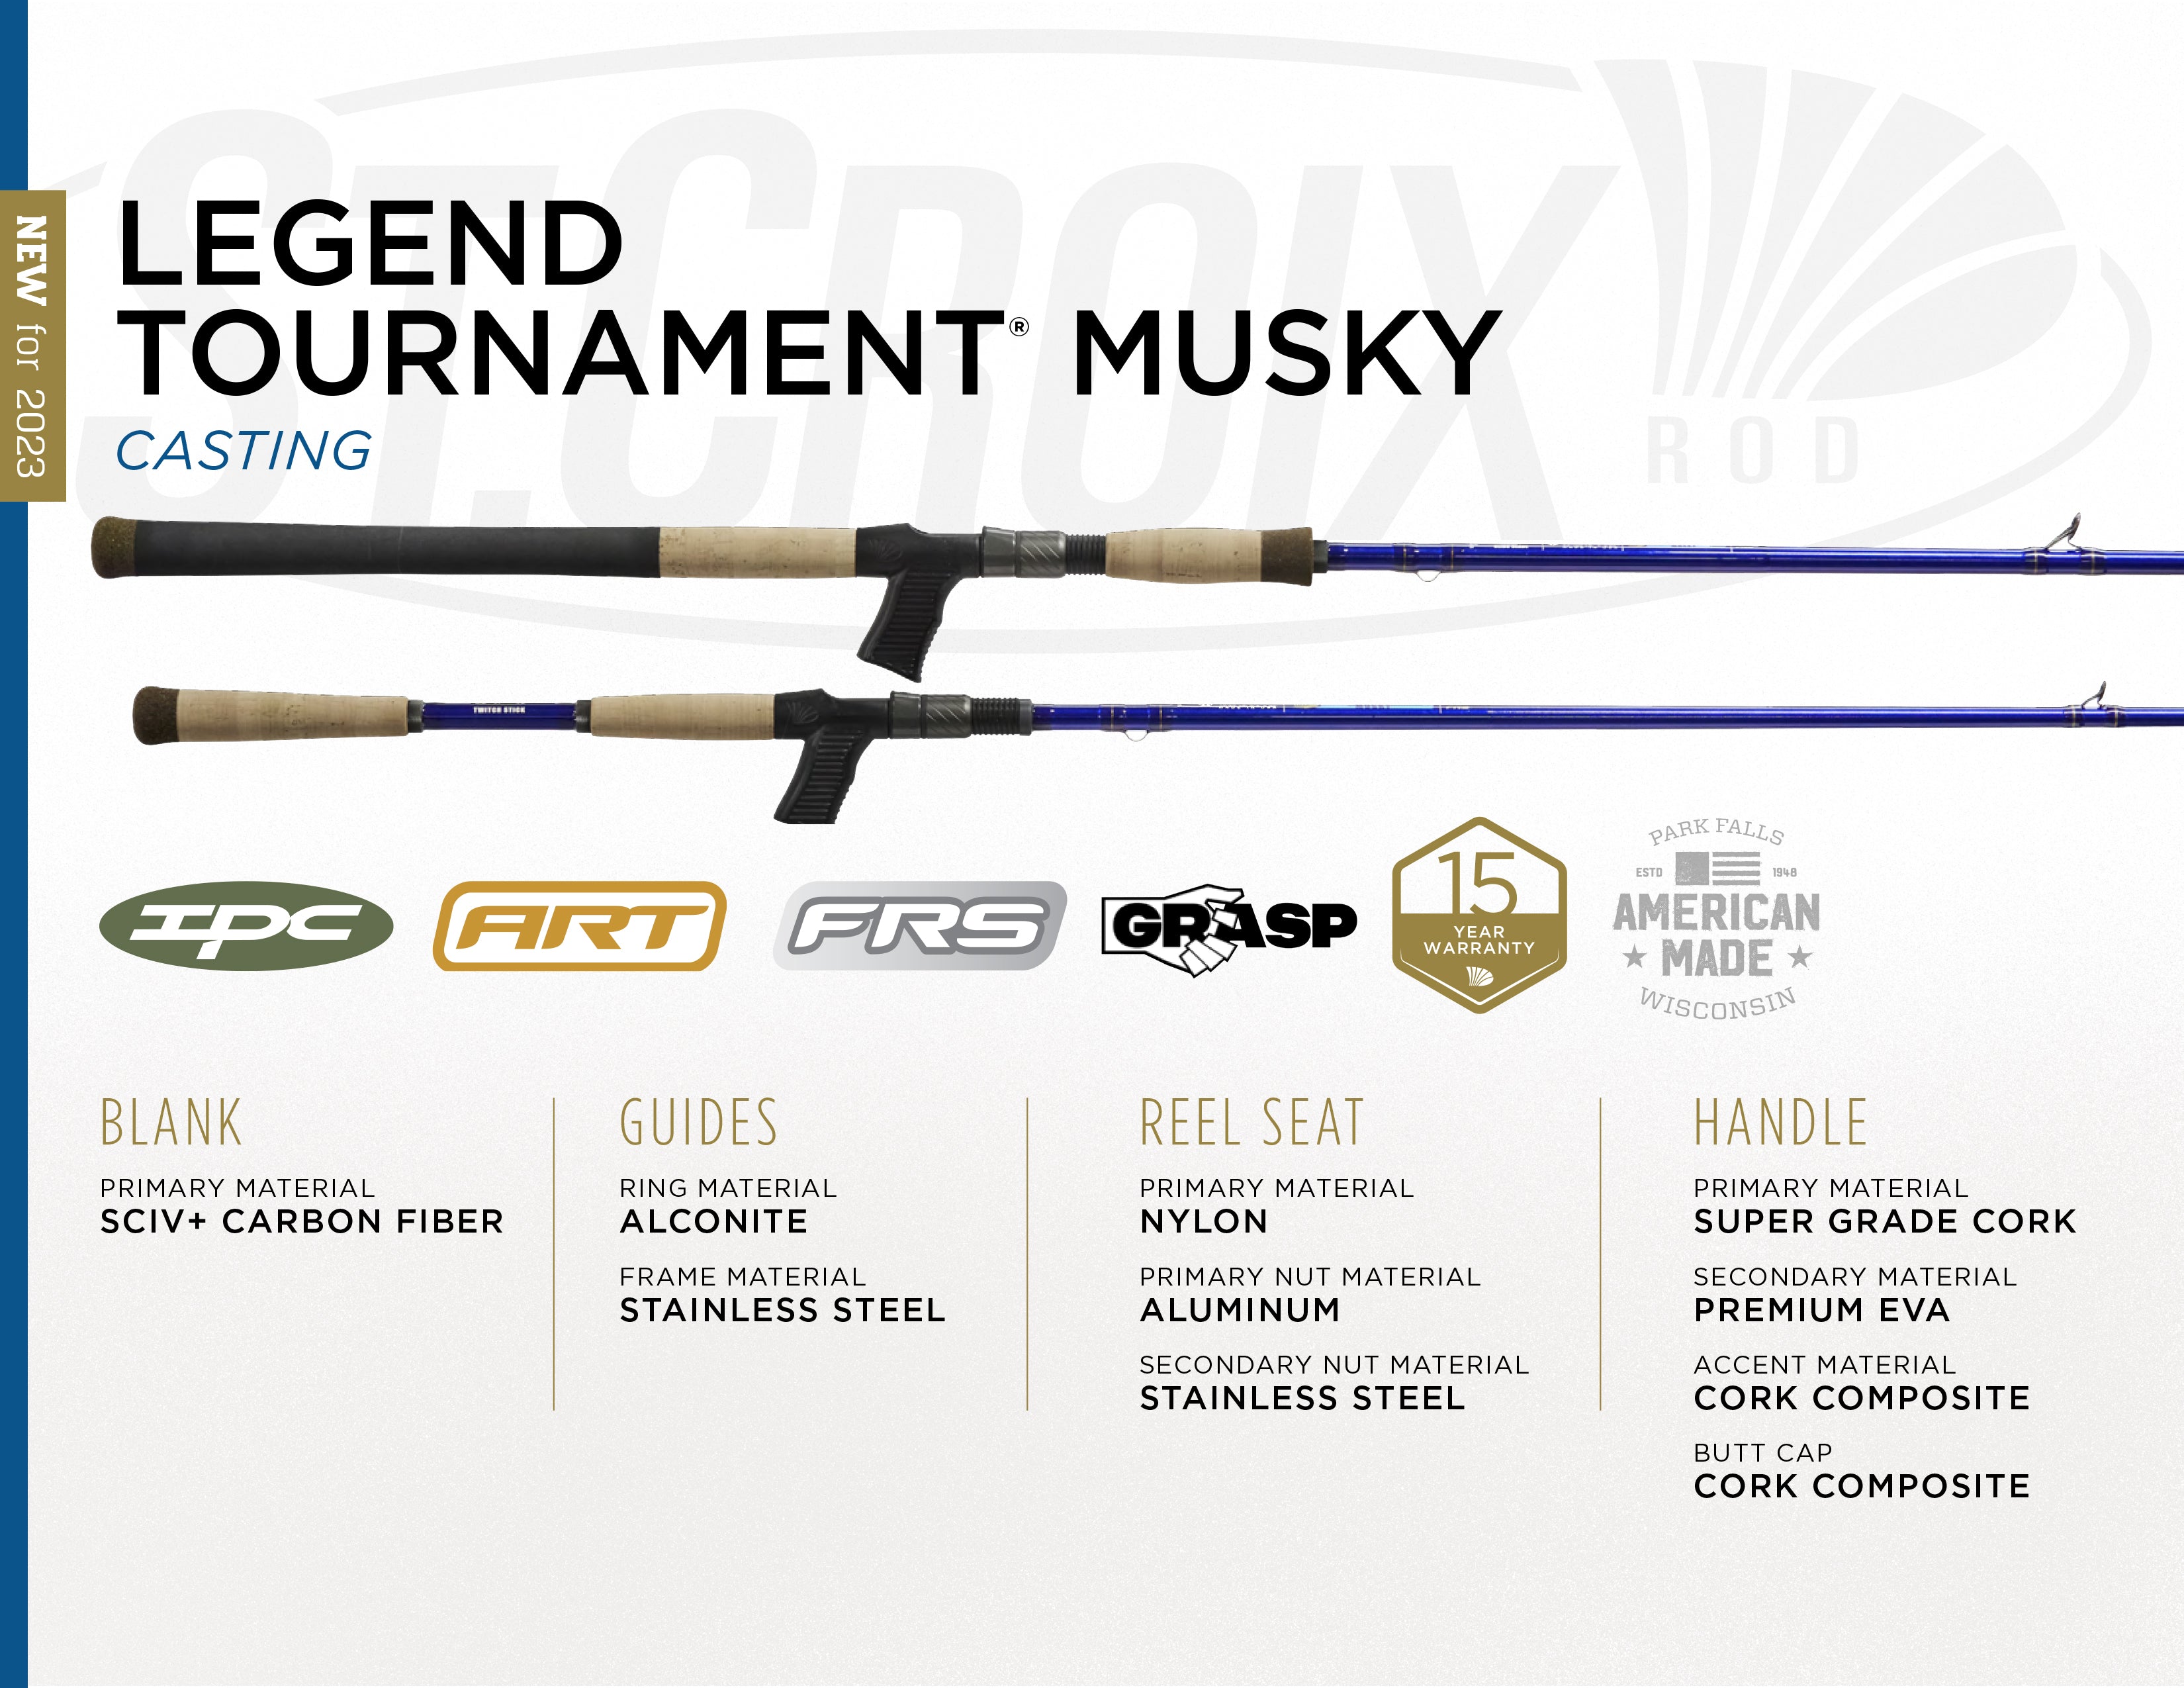 St. Croix Legend Tournament Musky Downsizer Rods